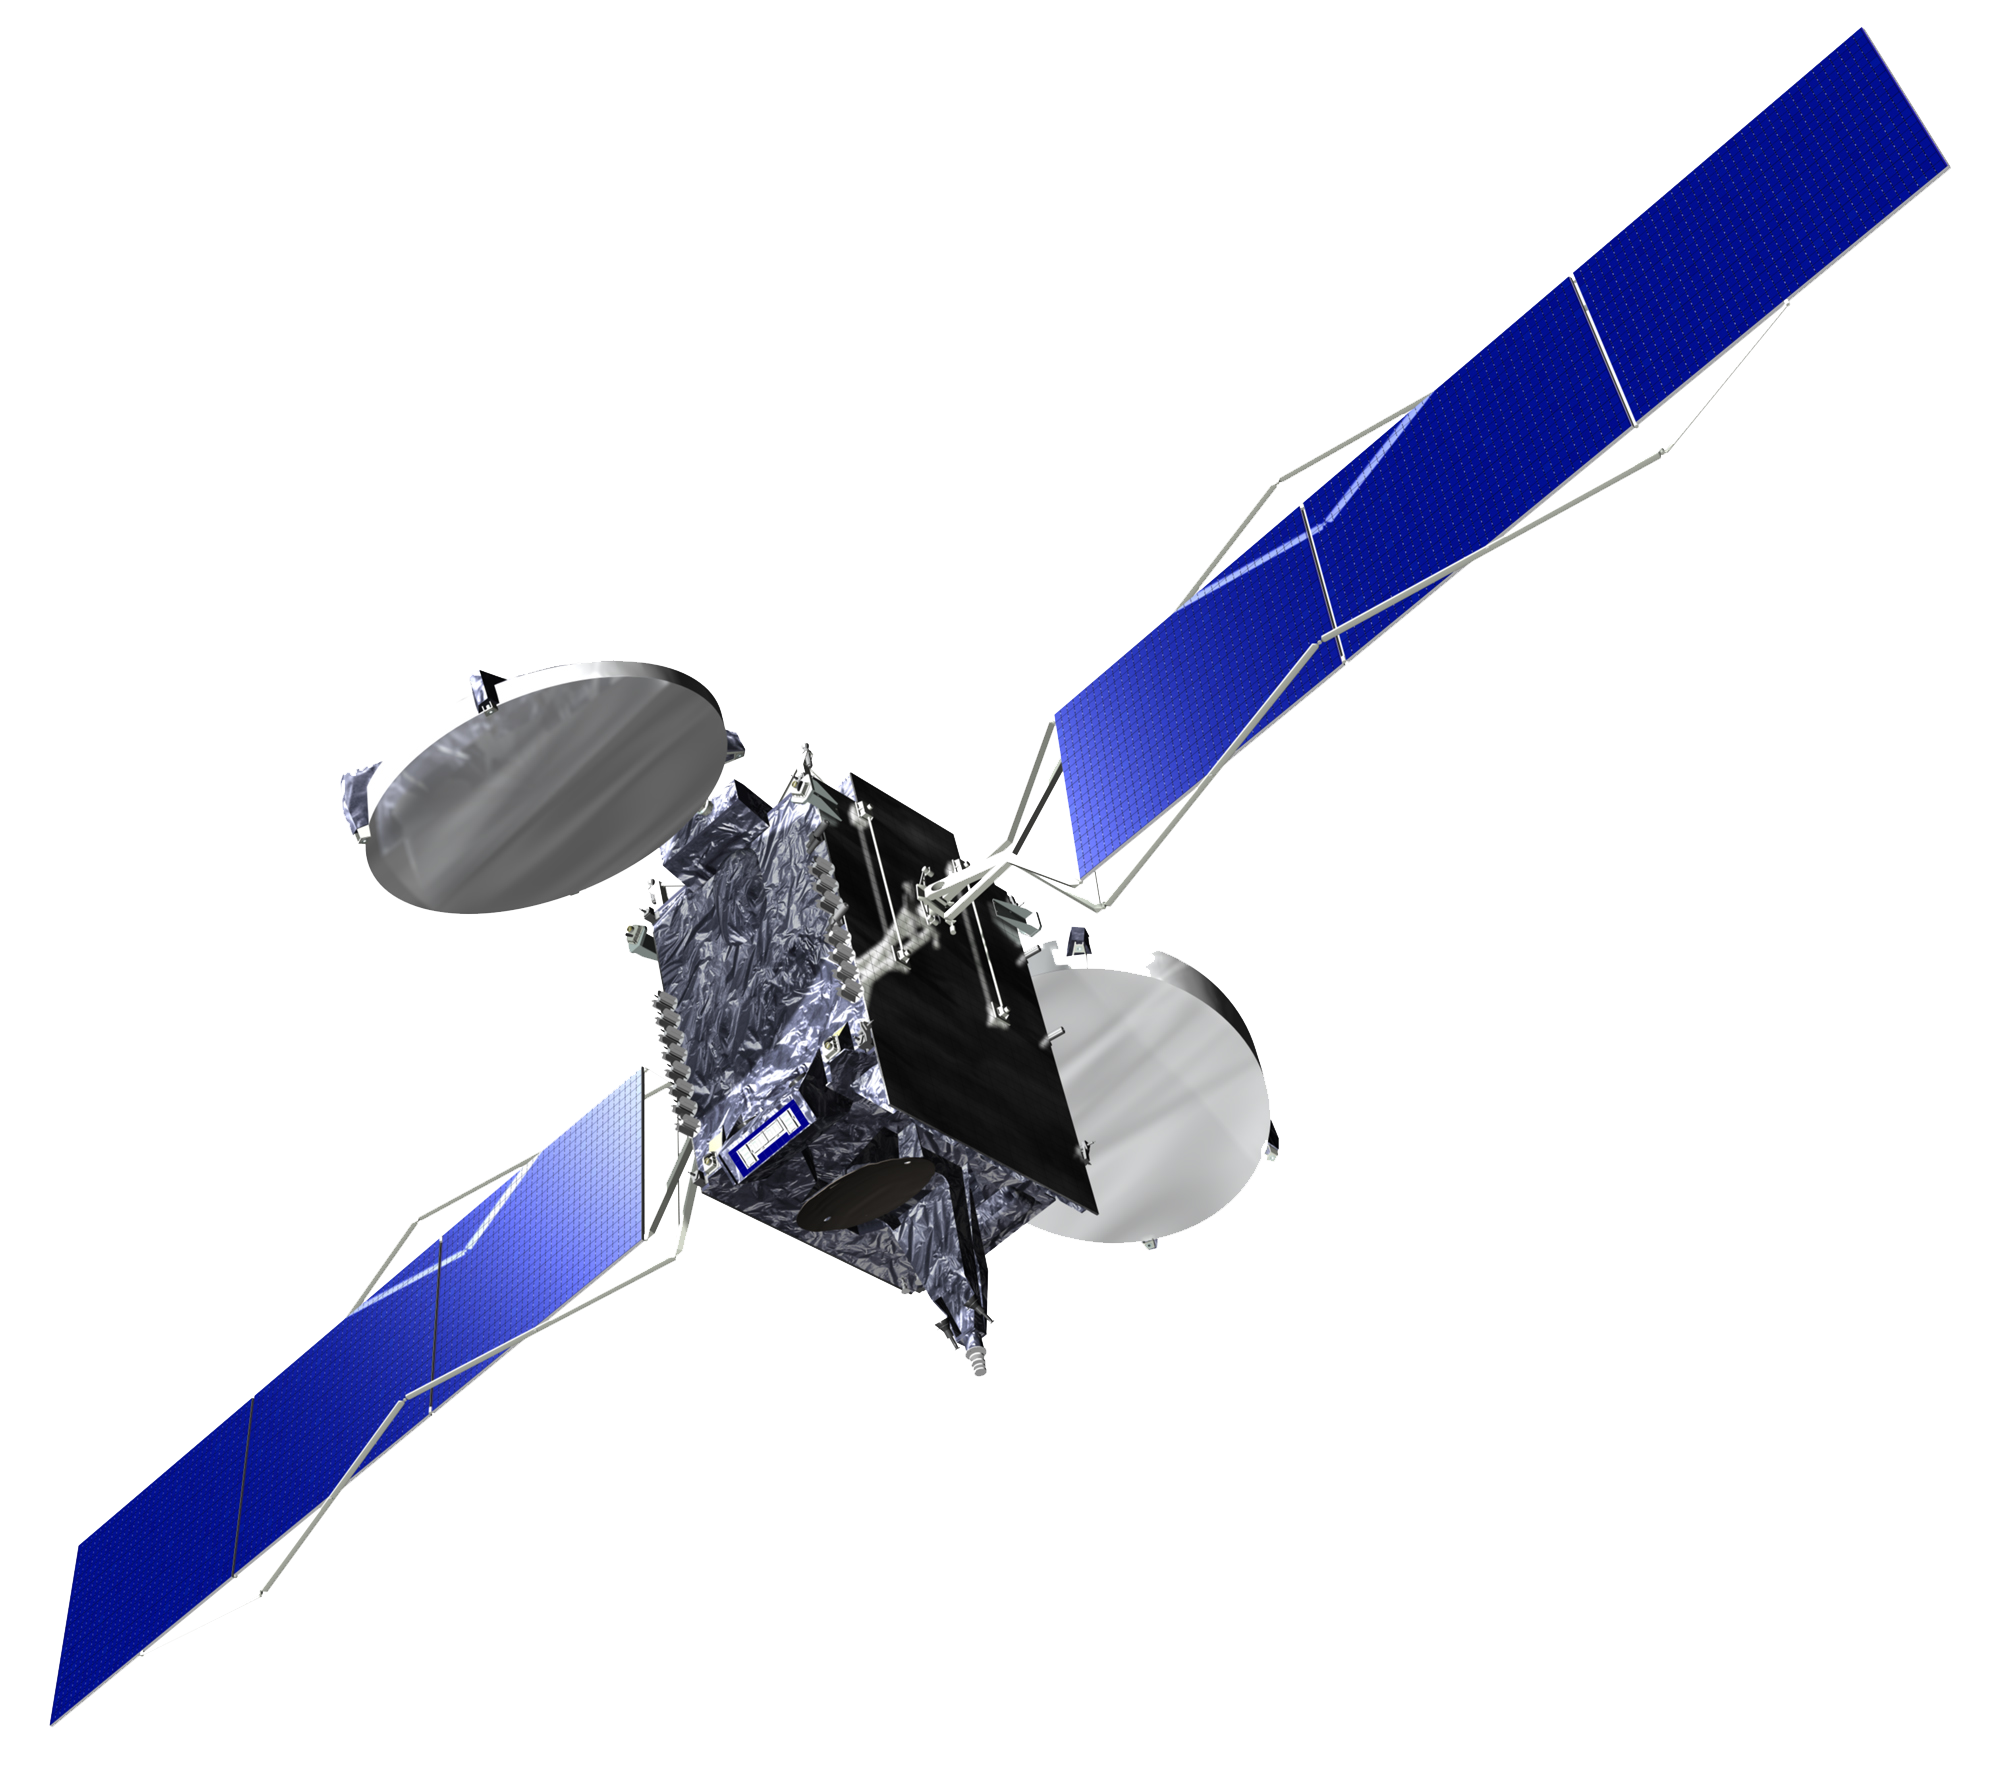 png 1417x723 Boeing satellite